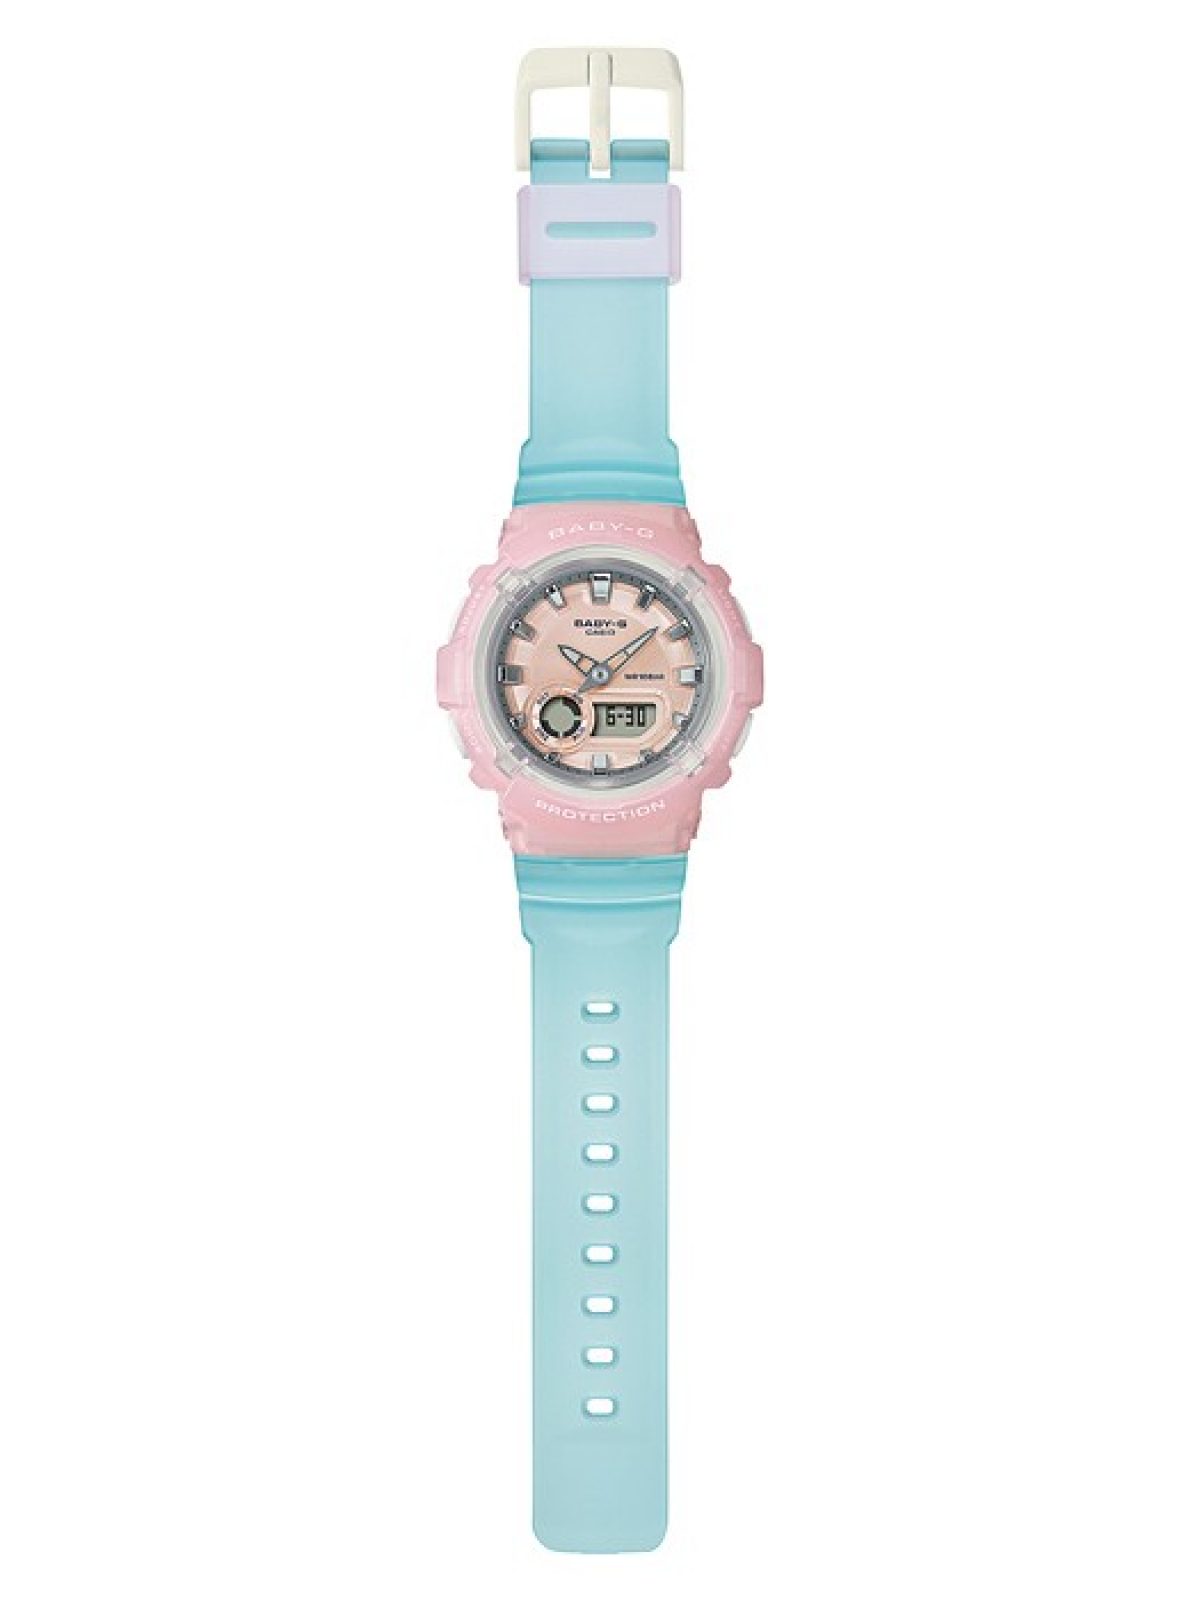 BABY-G BGA-280-4A3 手表 透明色 #2